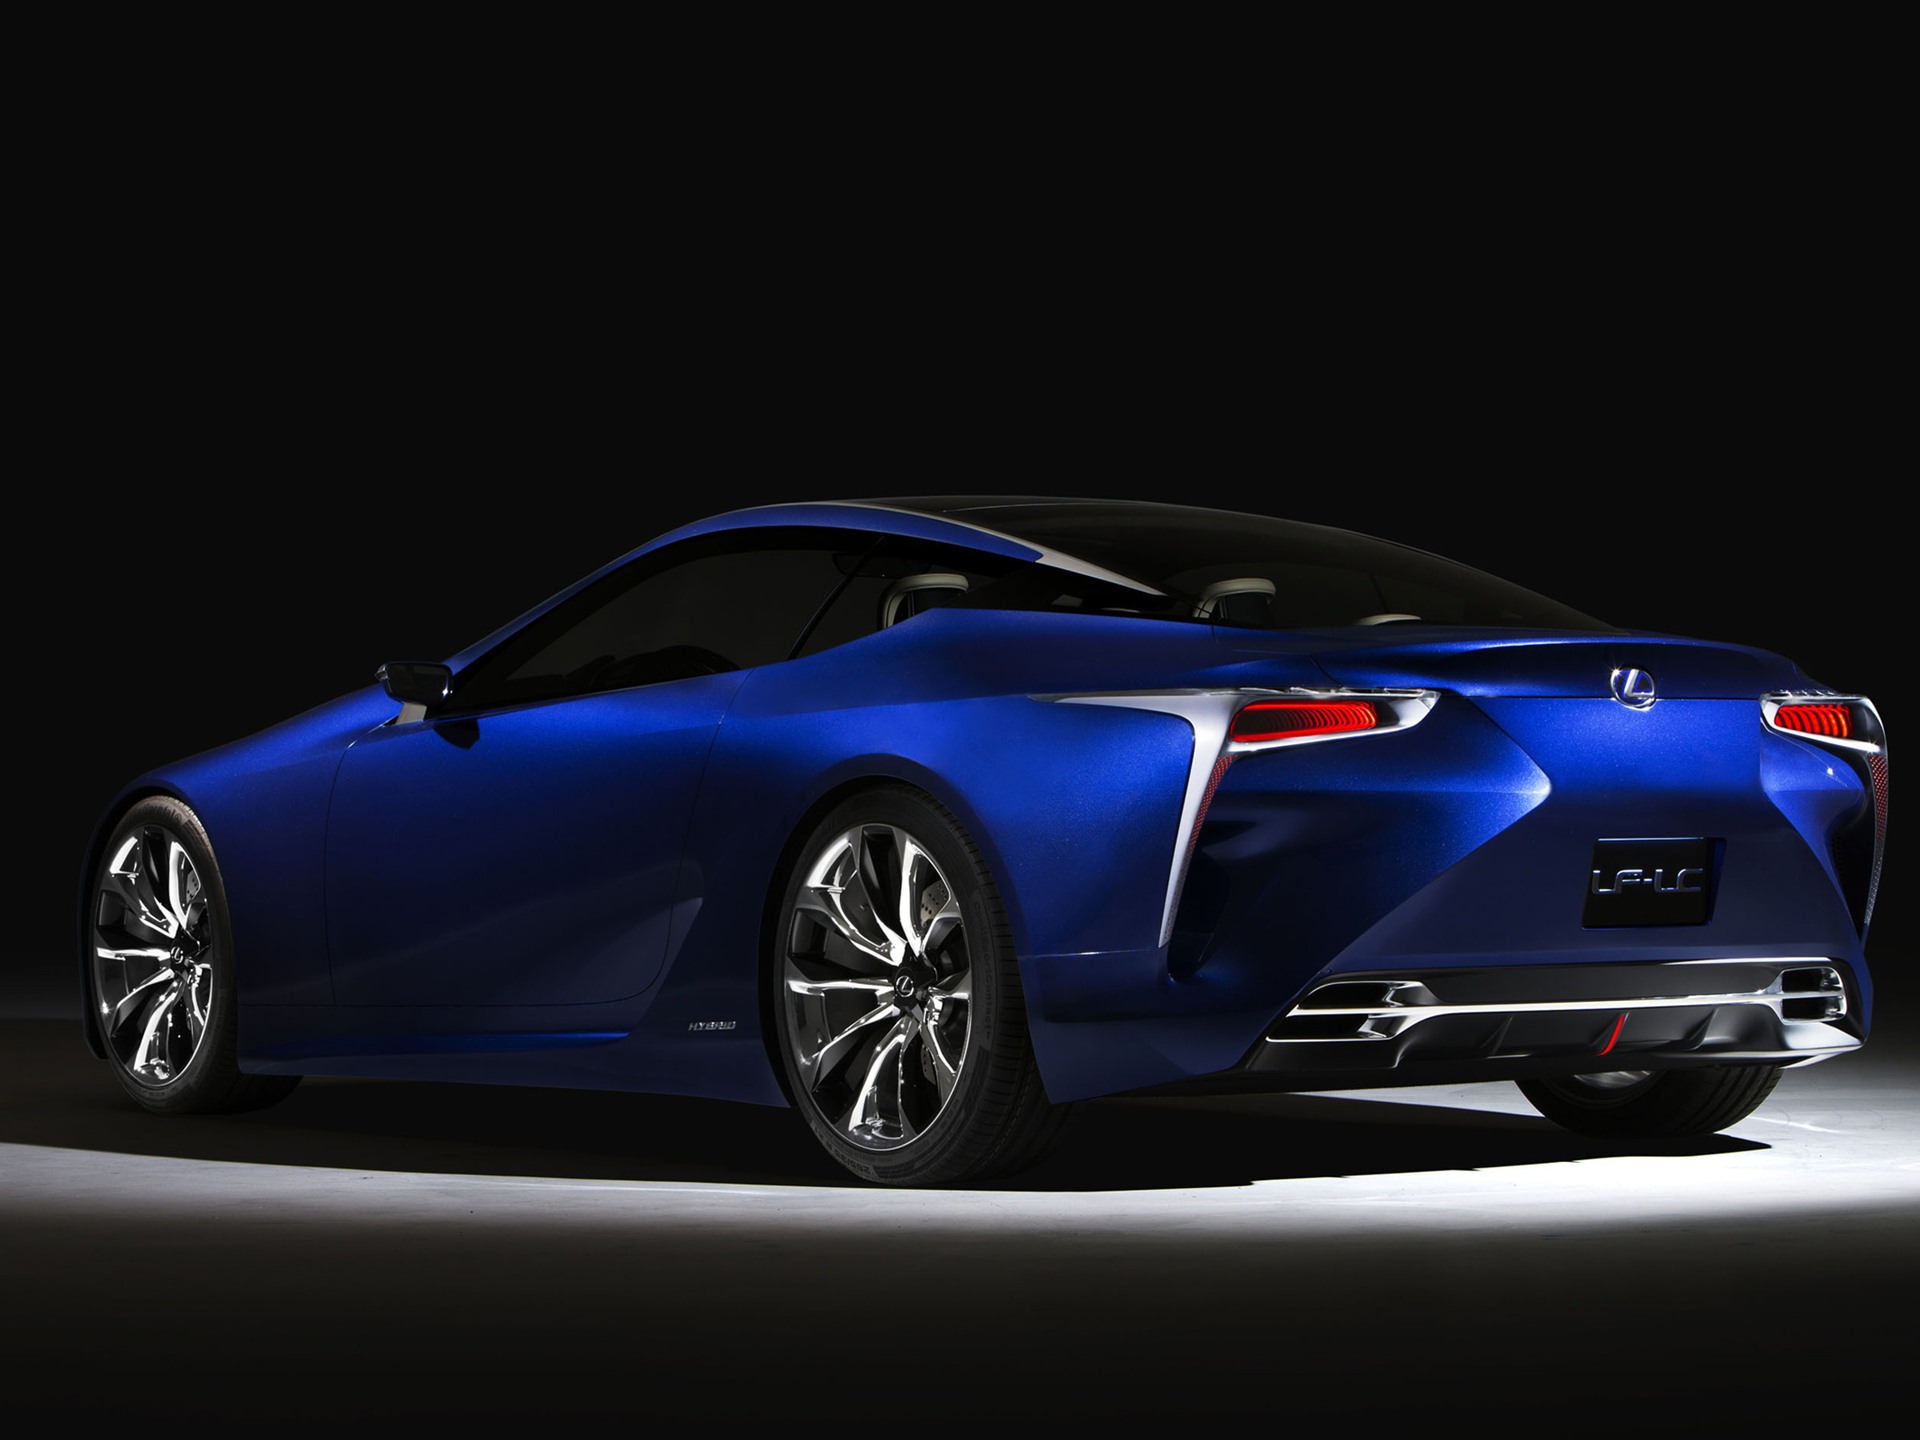 2012 Lexus LF-LC Blue concept 雷克萨斯 蓝色概念车 高清壁纸9 - 1920x1440